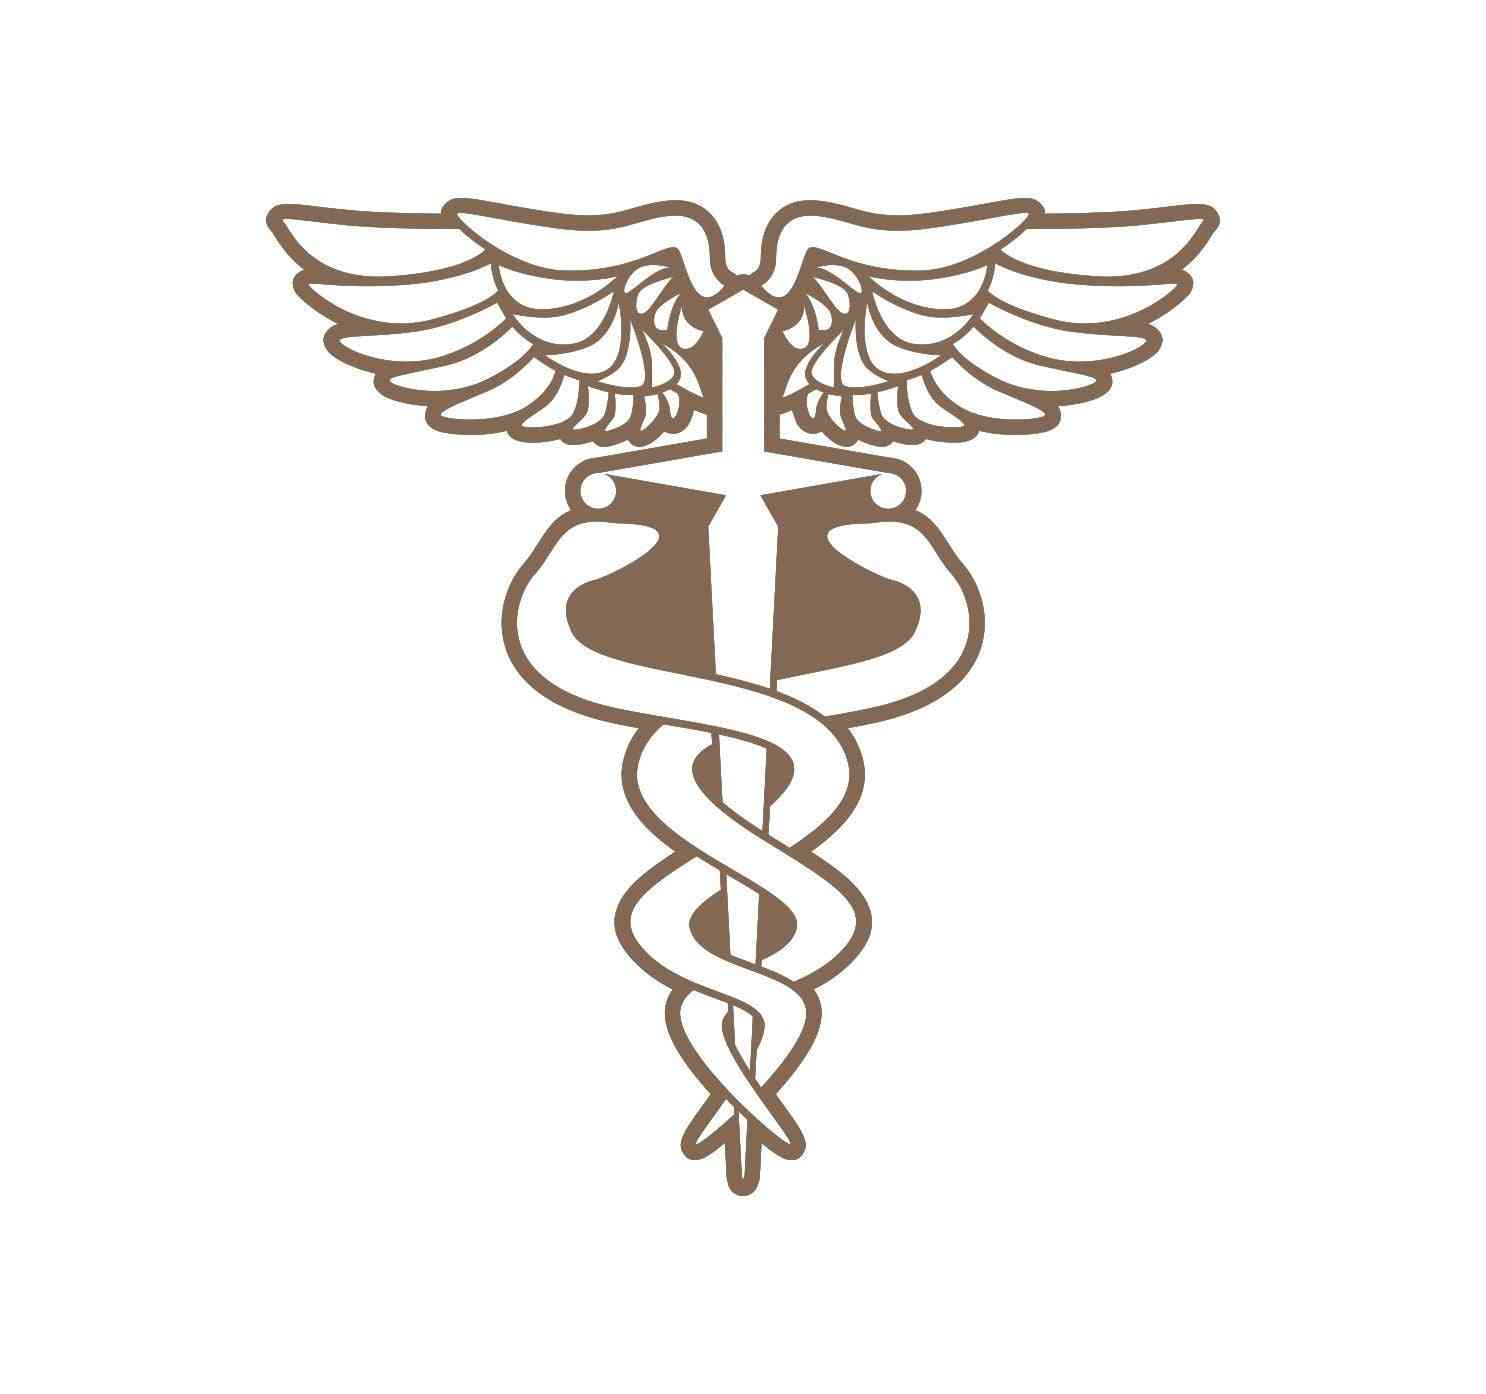 Medisch symbool - arts / verpleegkundige / emt